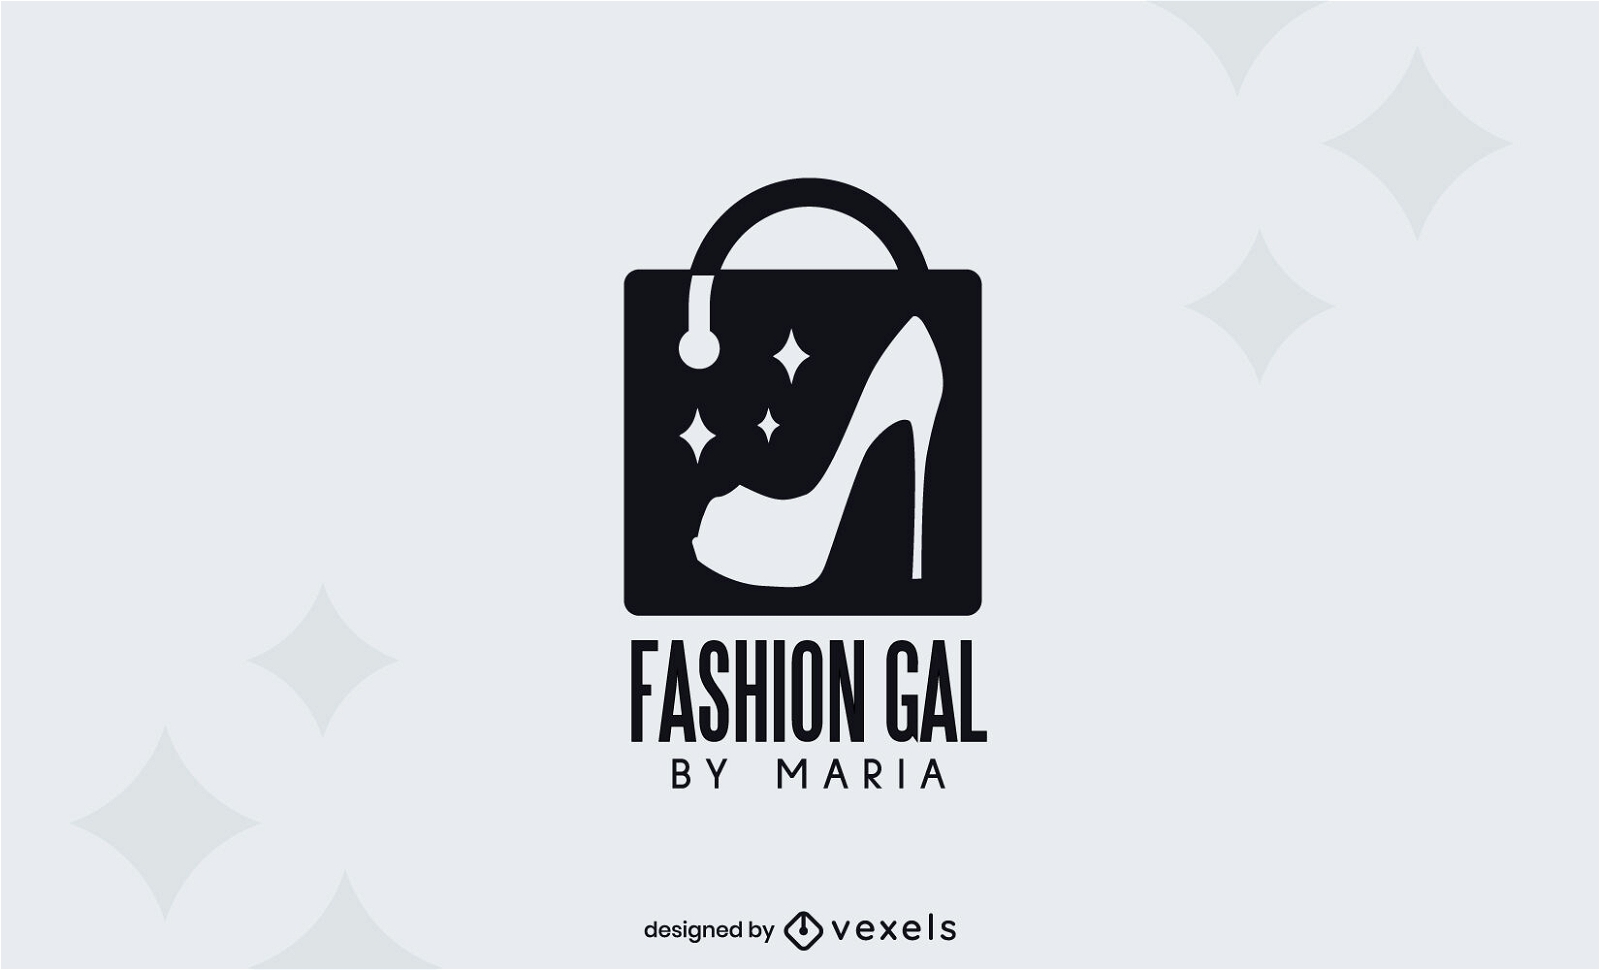 Fashion Gal logo design